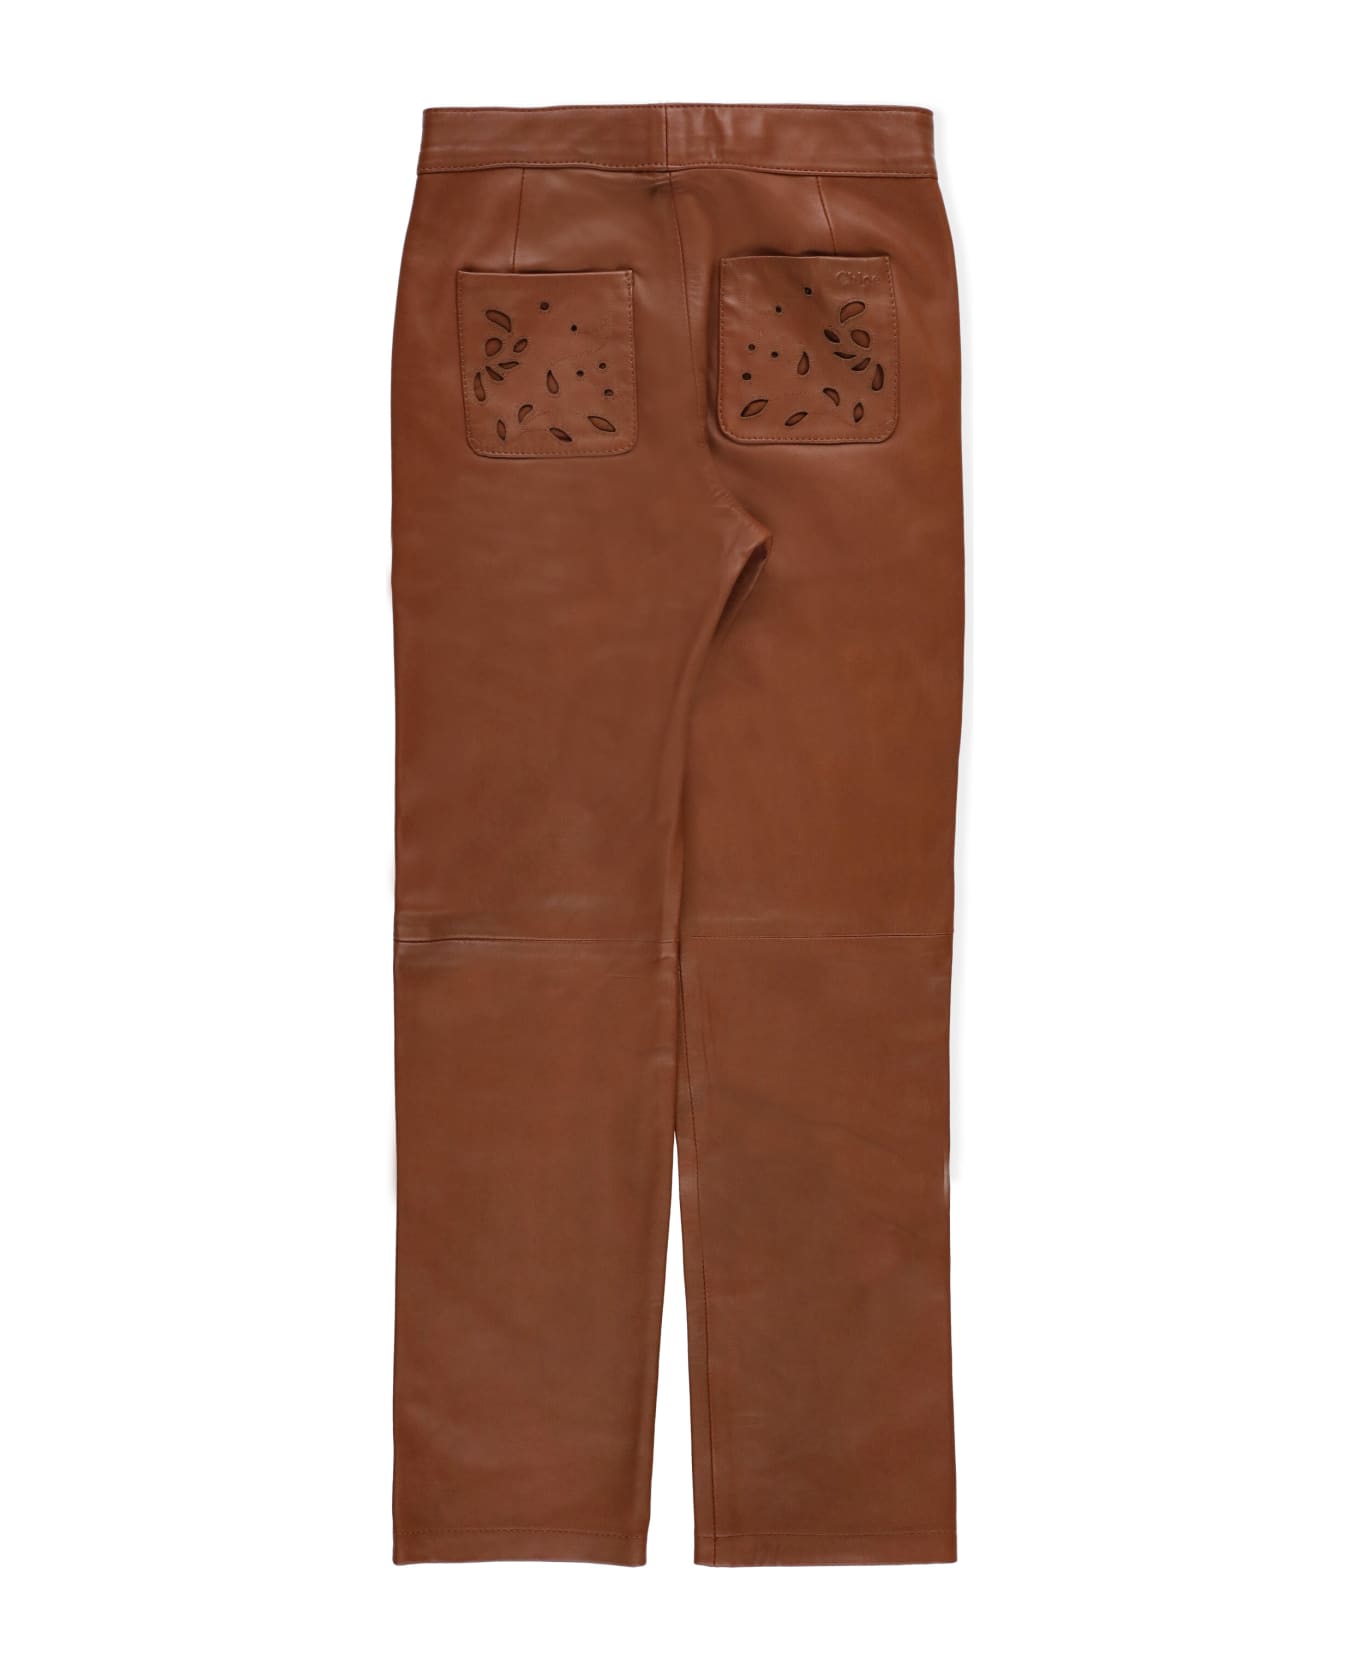 Chloé Leather Pants - Brown